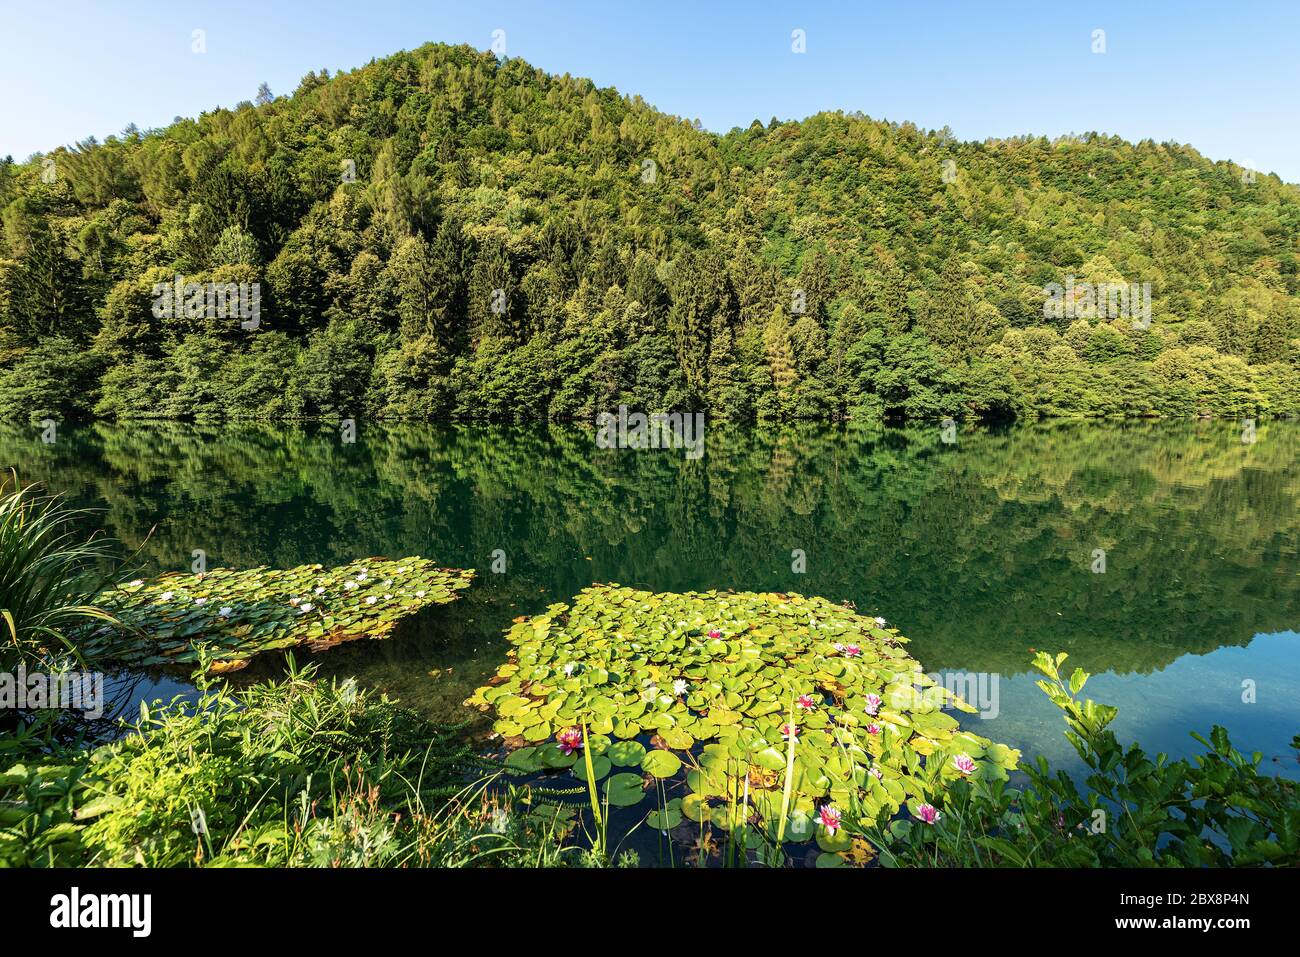 Lago di Levico, small beautiful lake in Italian Alps, Valsugana valley, Levico Terme town, Trento province, Trentino Alto Adige, Italy, Europe Stock Photo